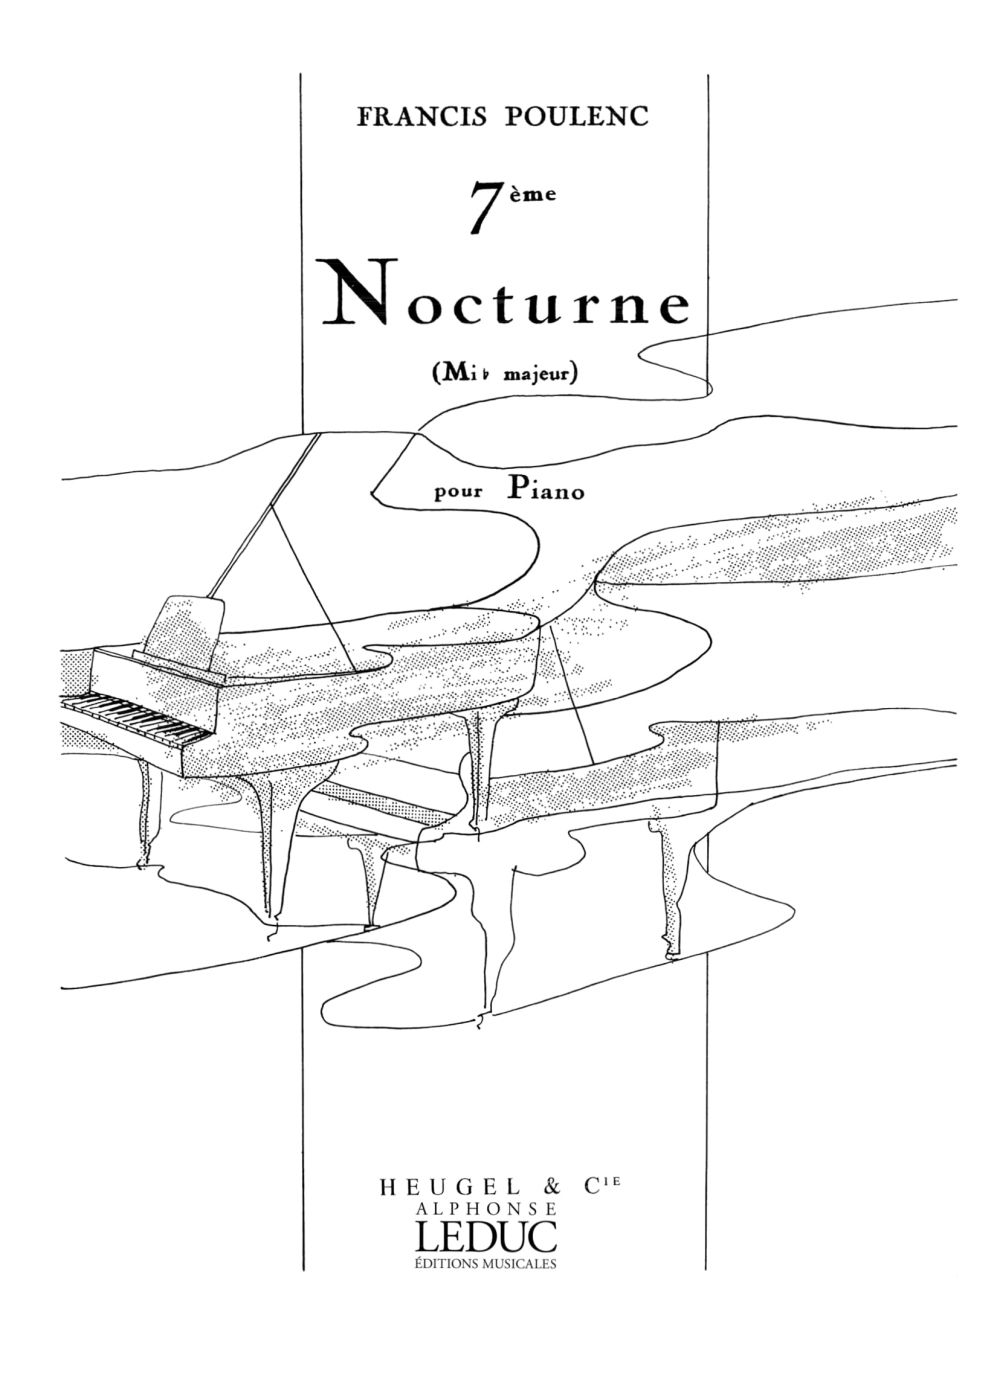 Francis Poulenc: Nocturne N07 En Mib Majeur